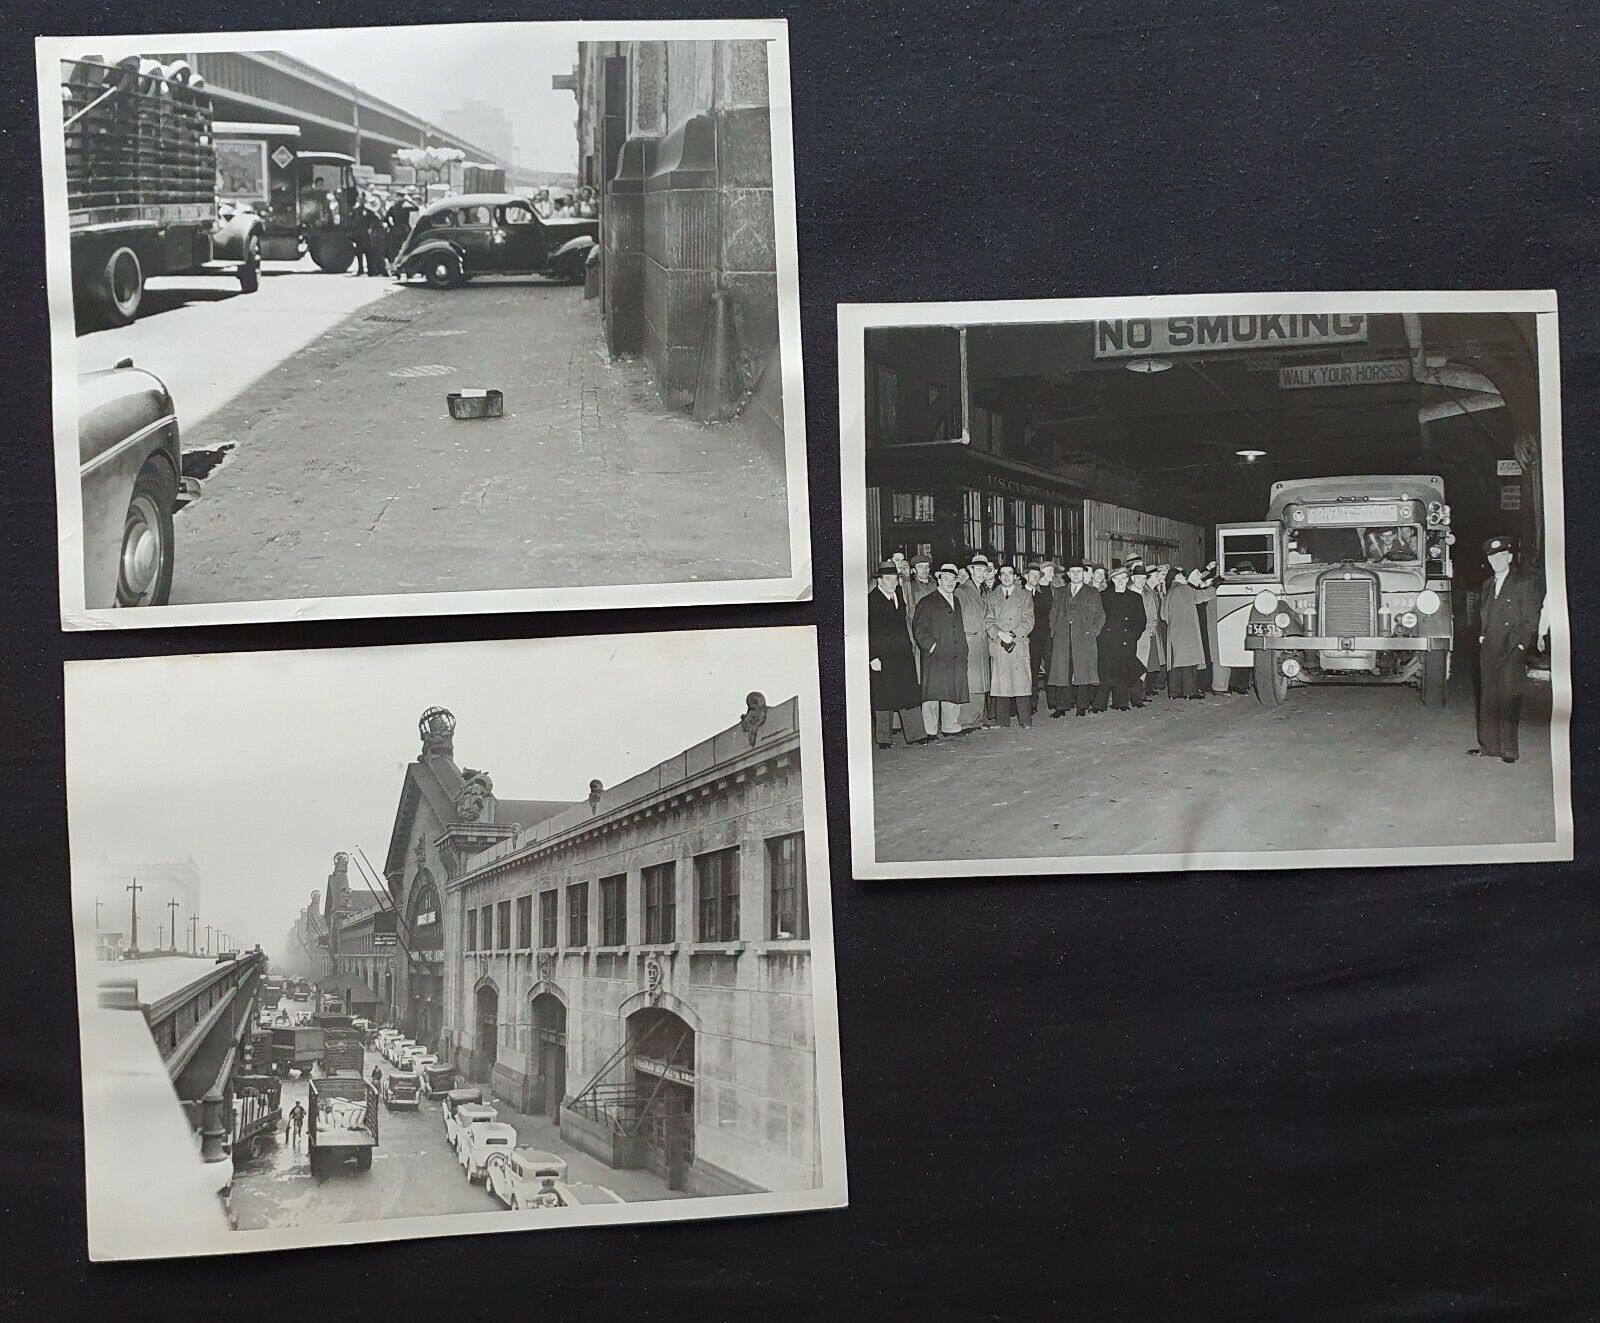 3 Photographs of New York docks. Read info on back of photographs.